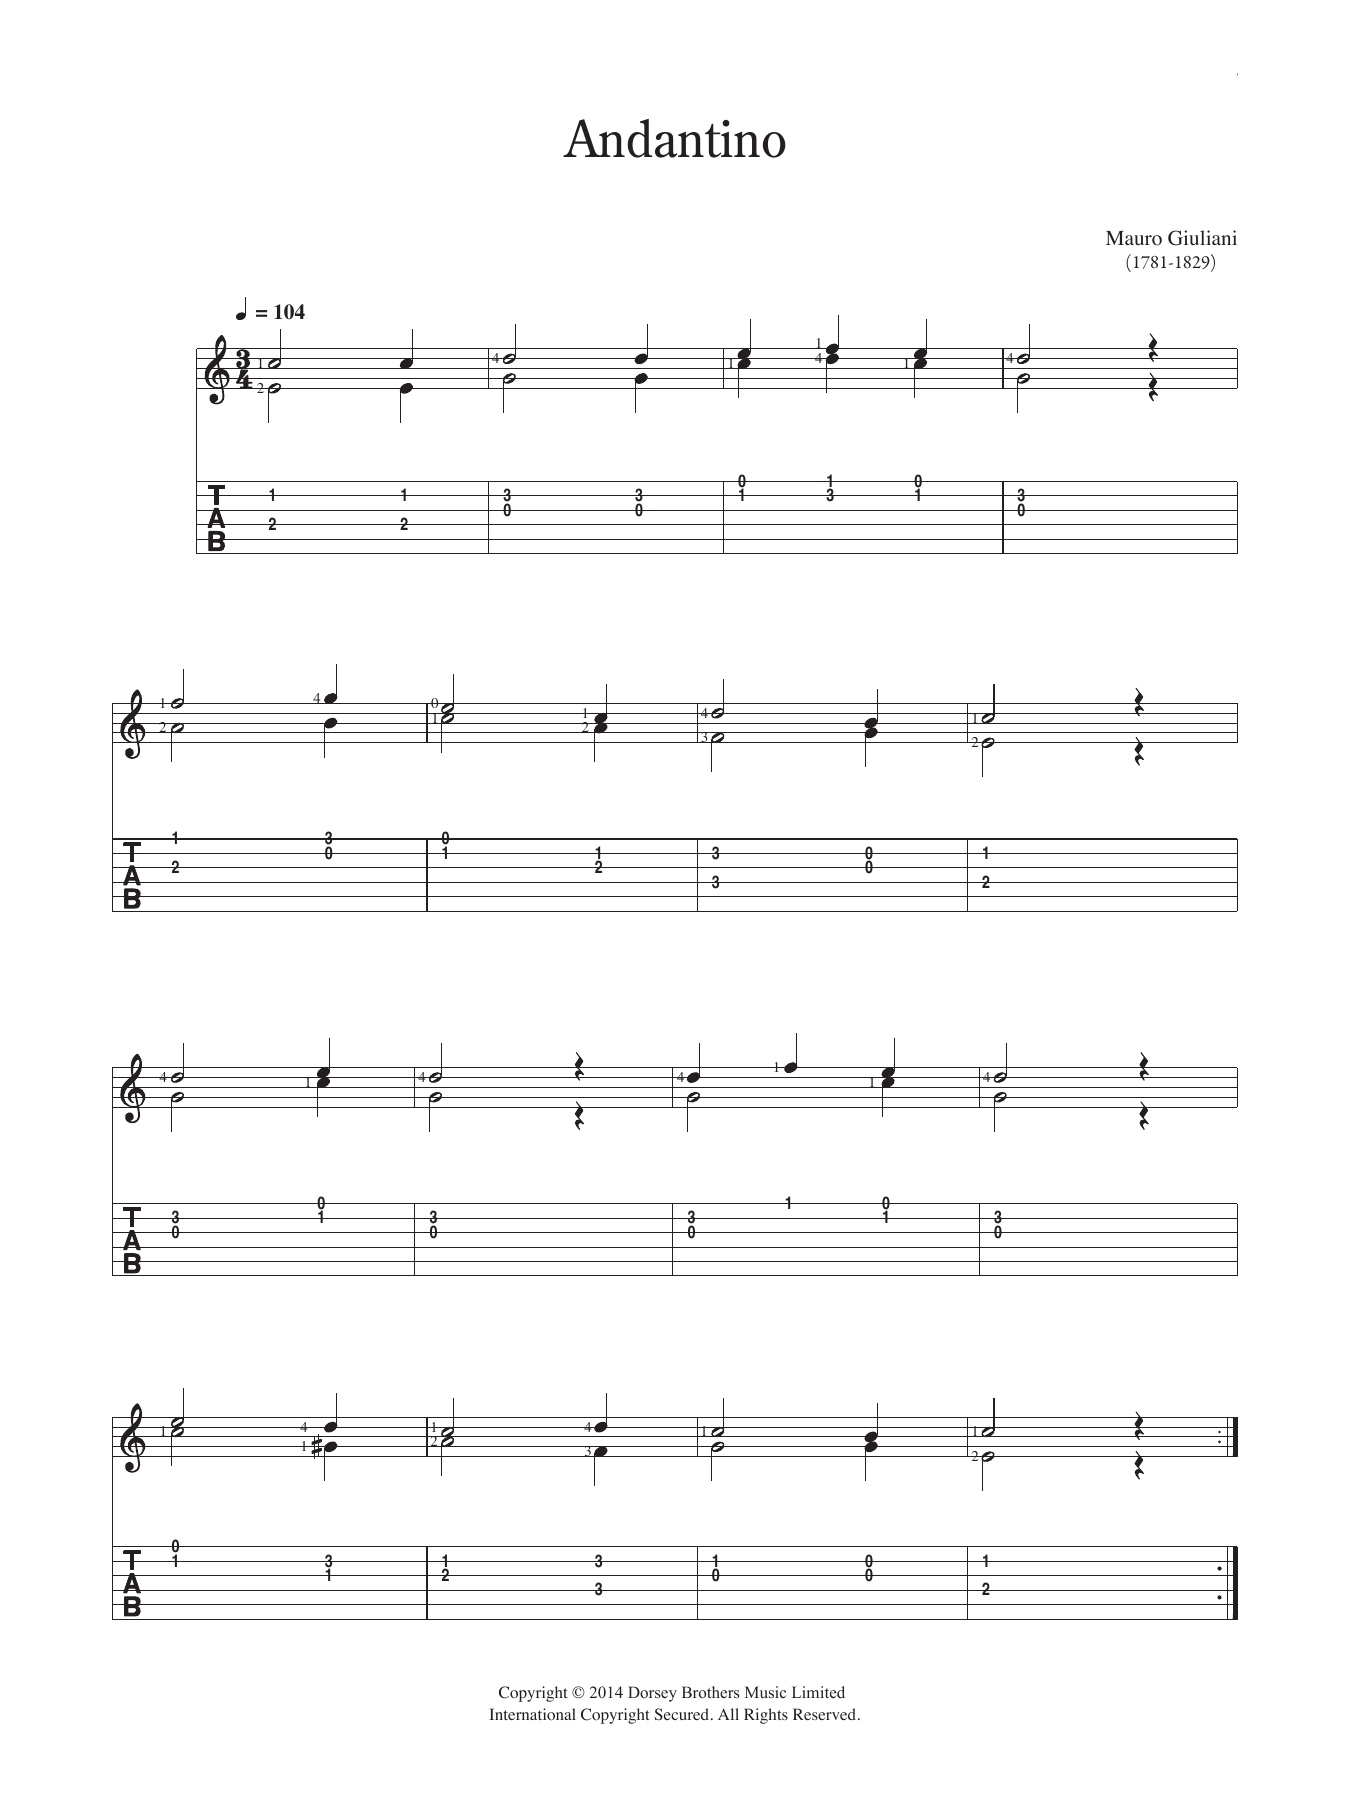 Download Mauro Giuliani Andantino Sheet Music